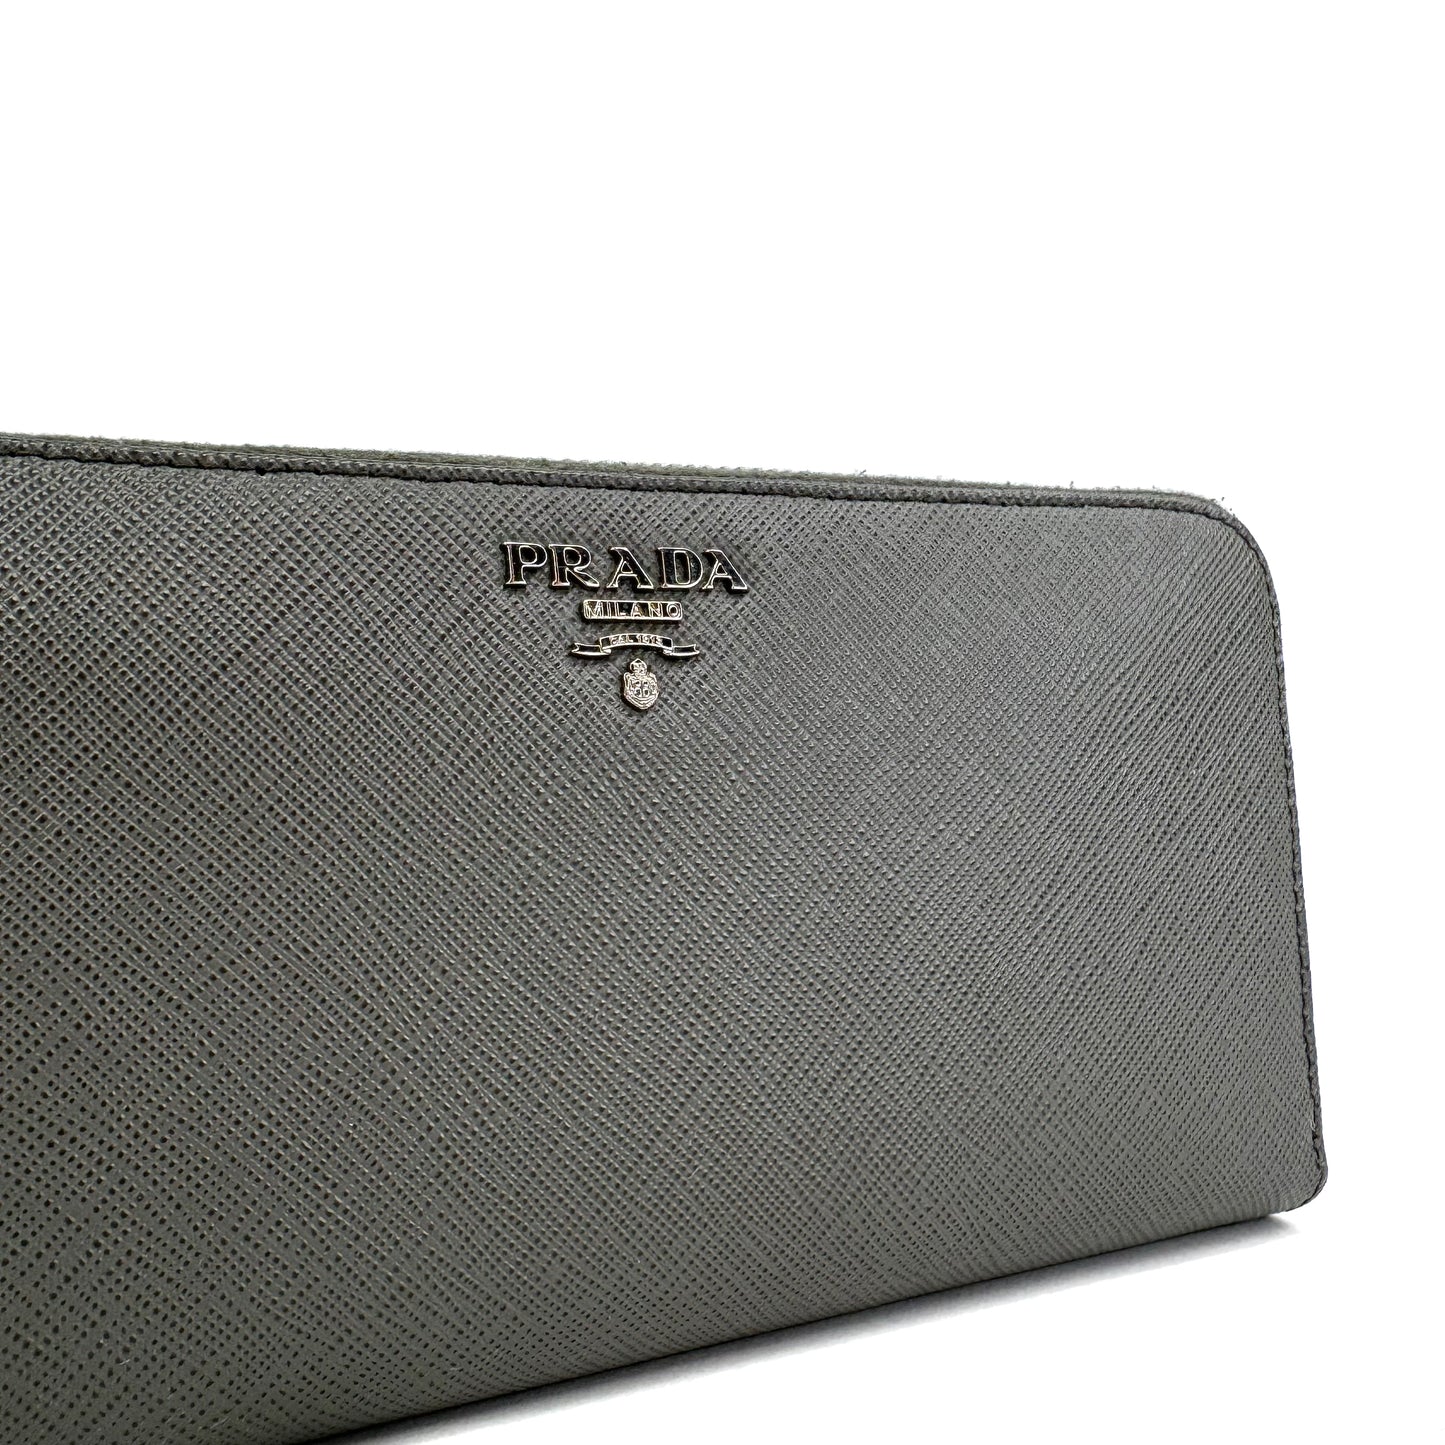 Prada Saffiano Leather Large Wallet